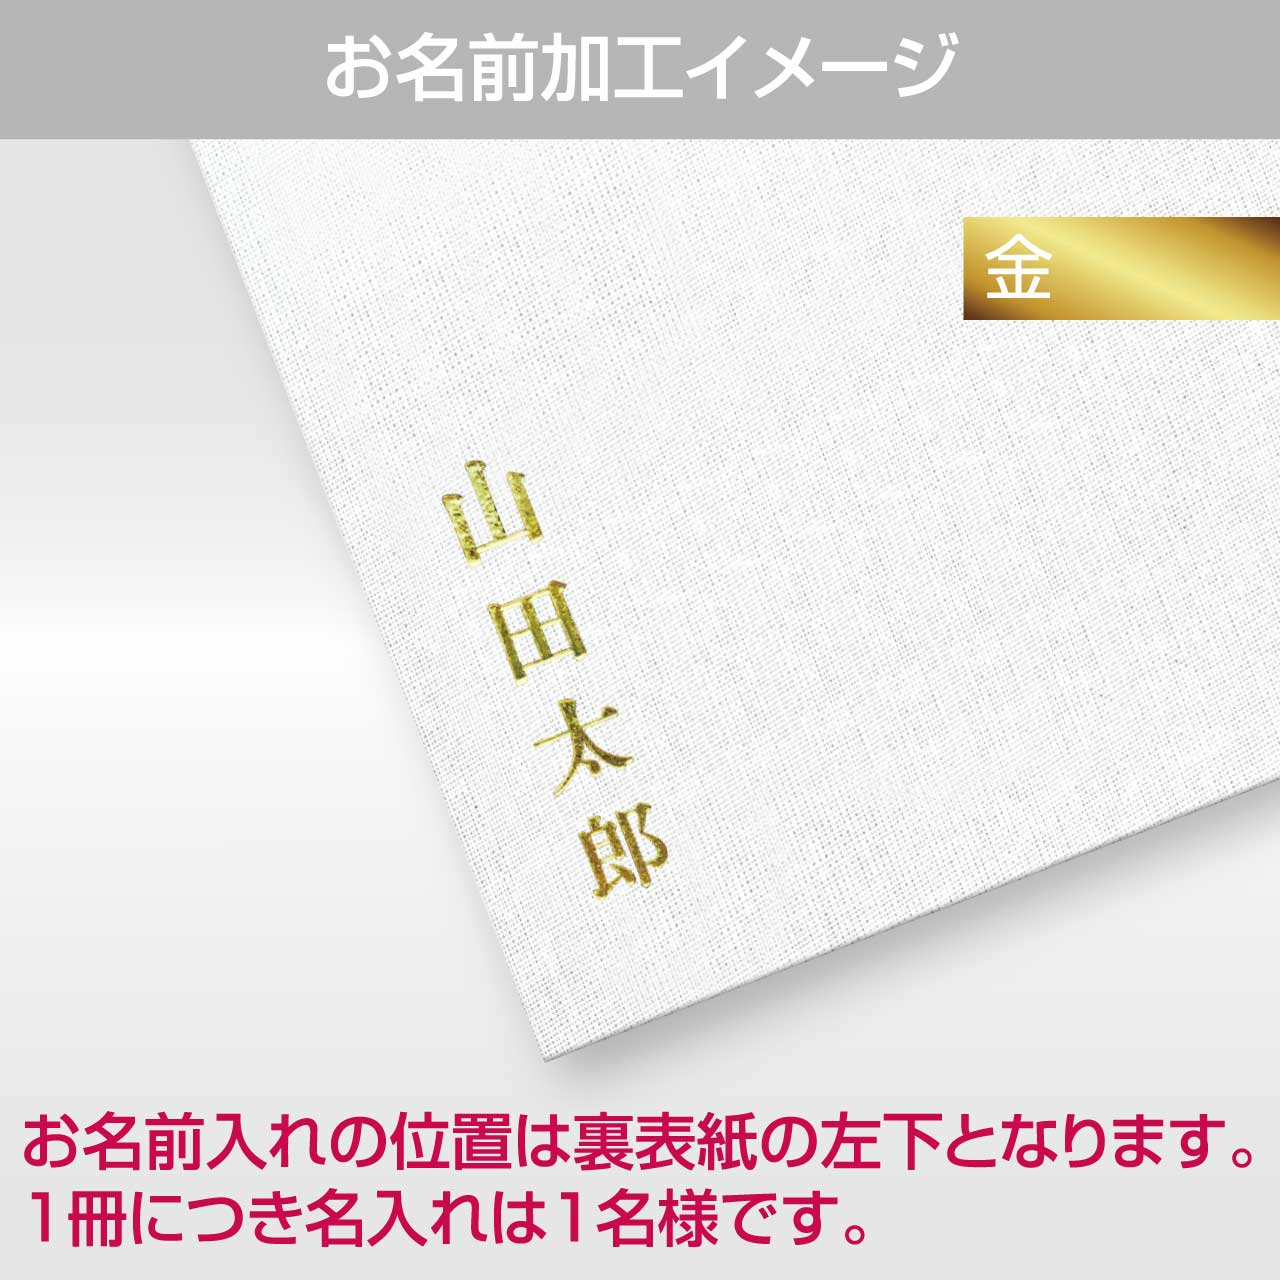 Goshuin book “Kiyora” Snow Rabbit/Yuzu Yukito